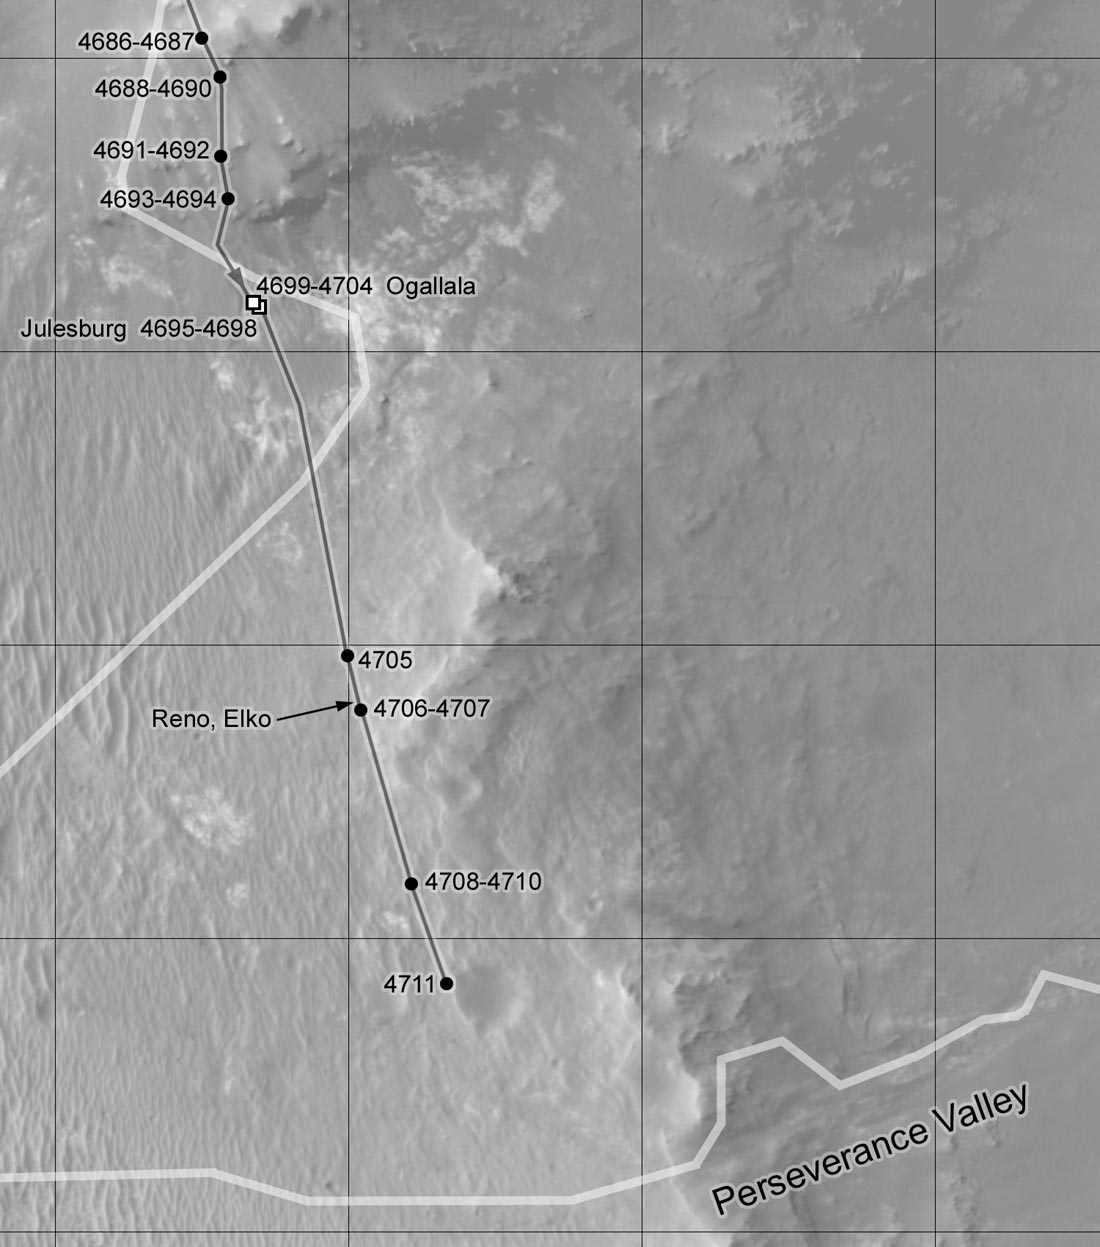 MARS: S putovanja rovera OPPORTUNITY  - Page 27 Index